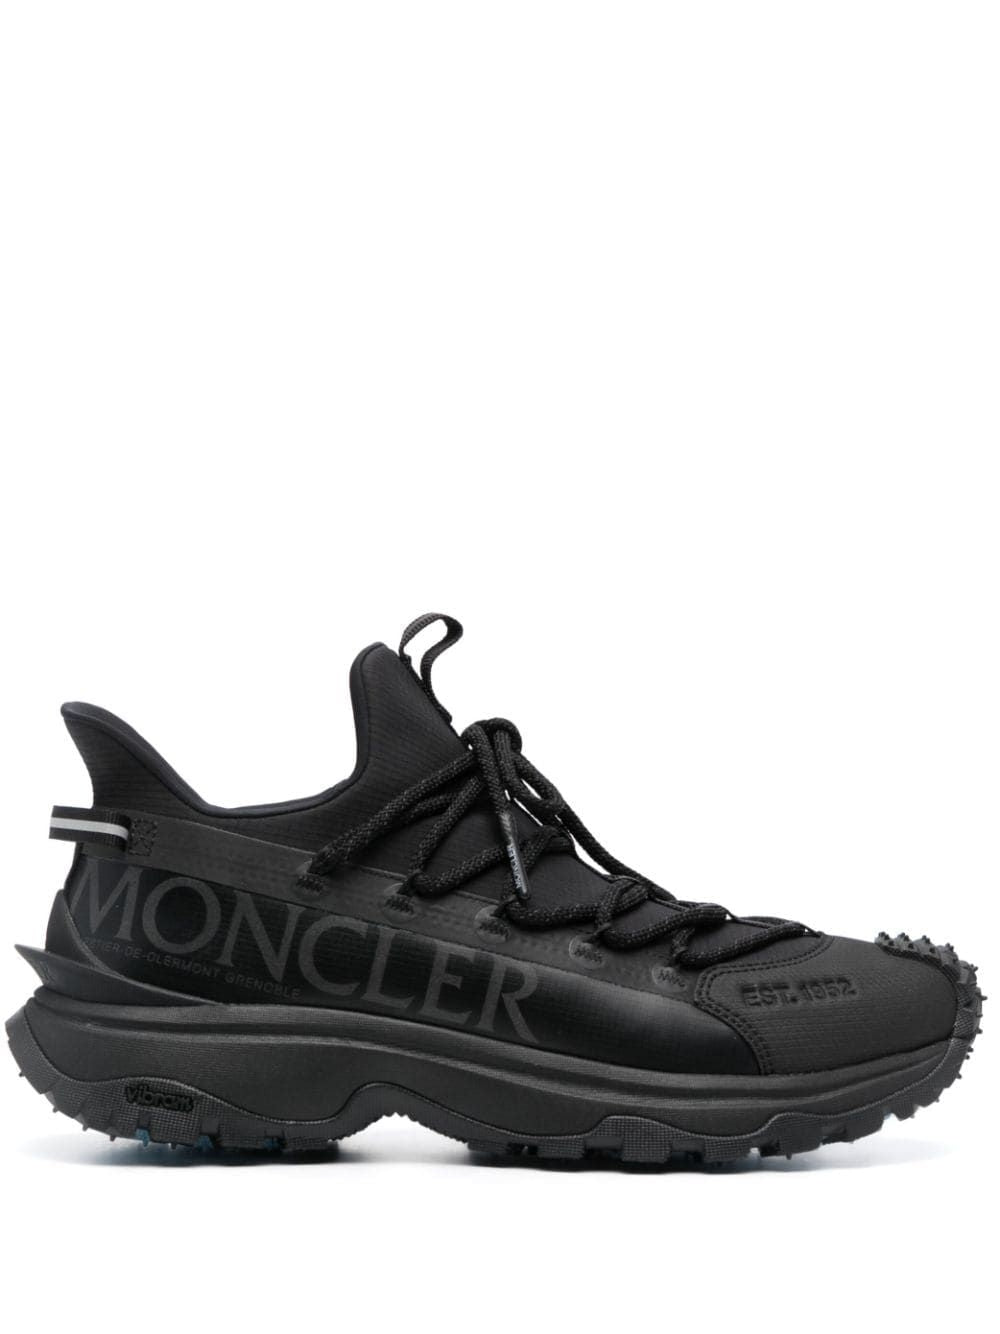 Black Trail Running Shoes for Men